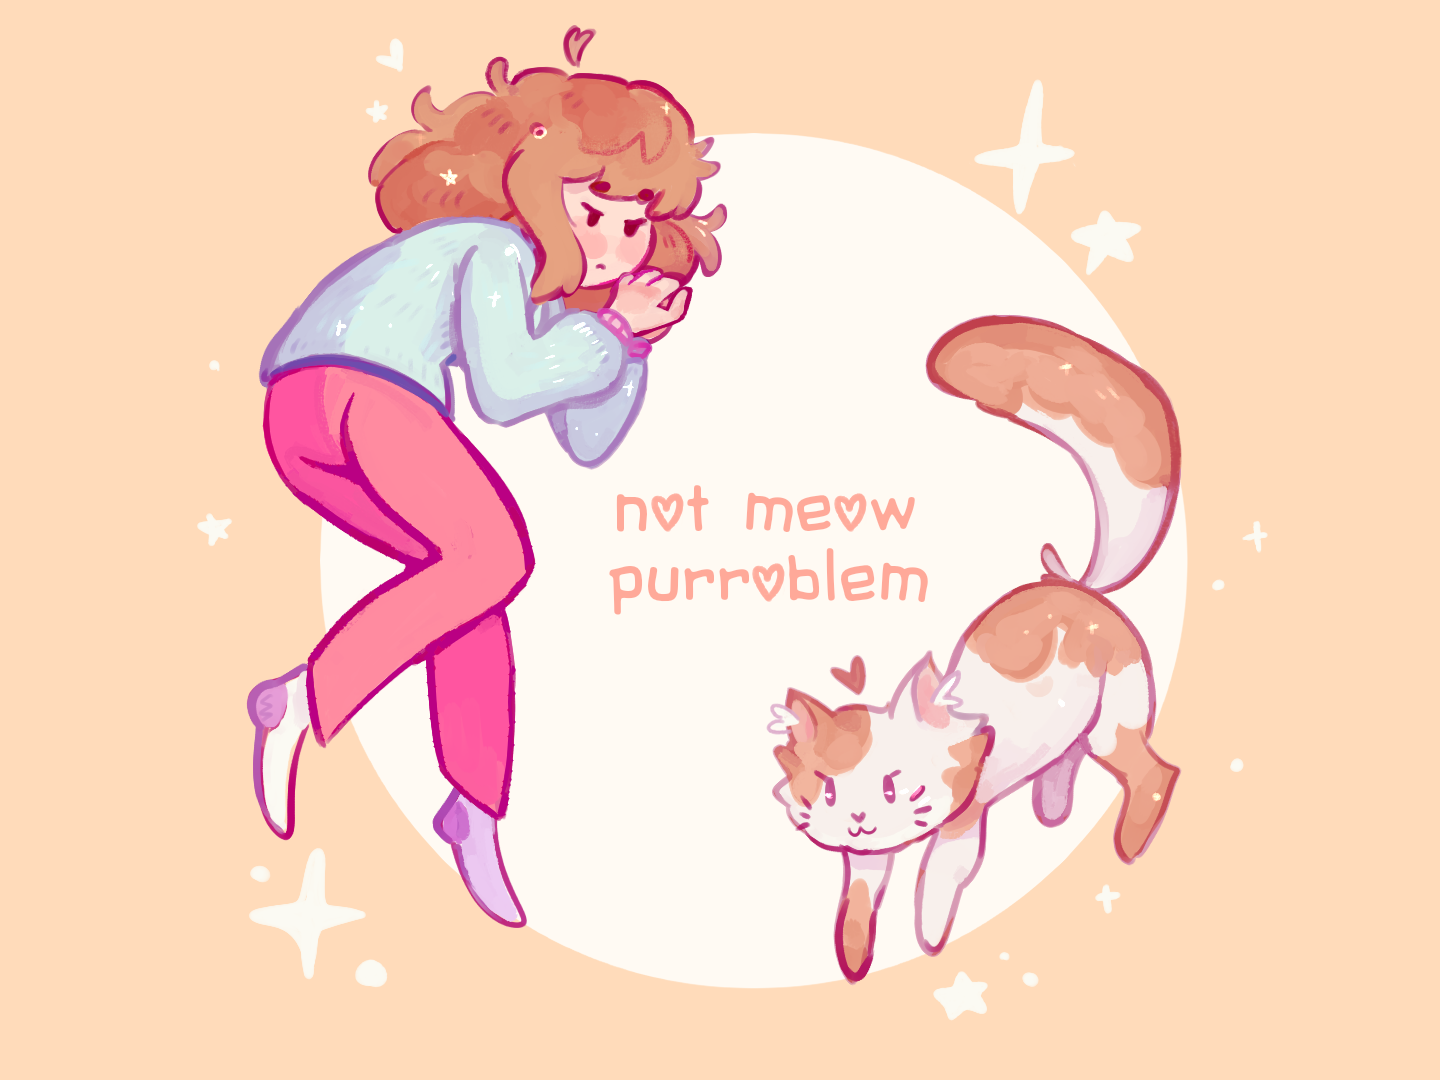 Not Meow Purroblem